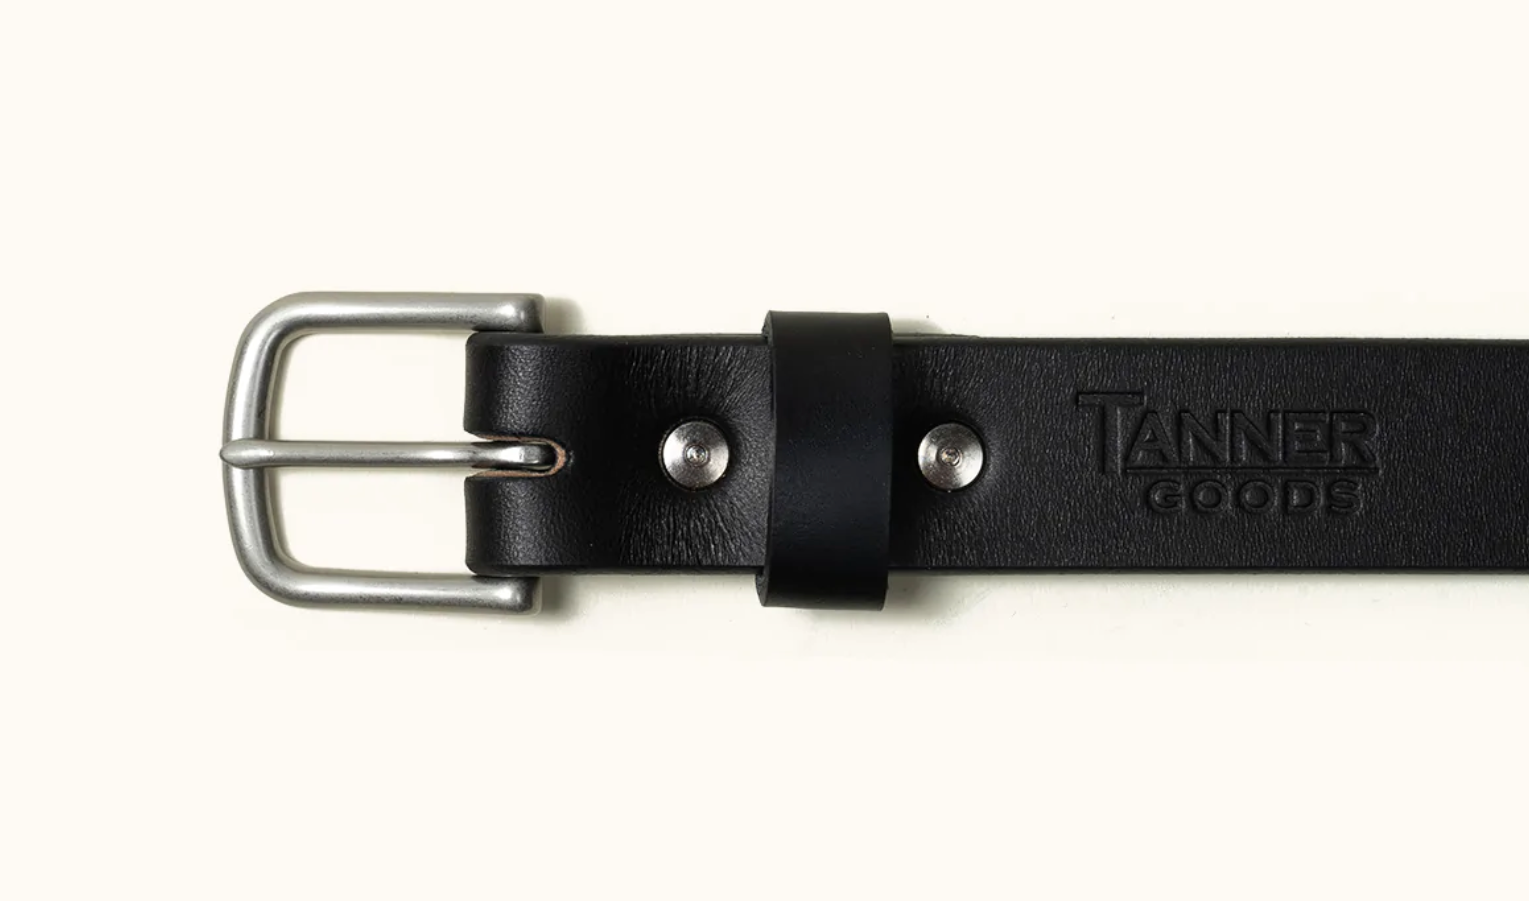 Tanner Goods Classic Belt in Black Stainless